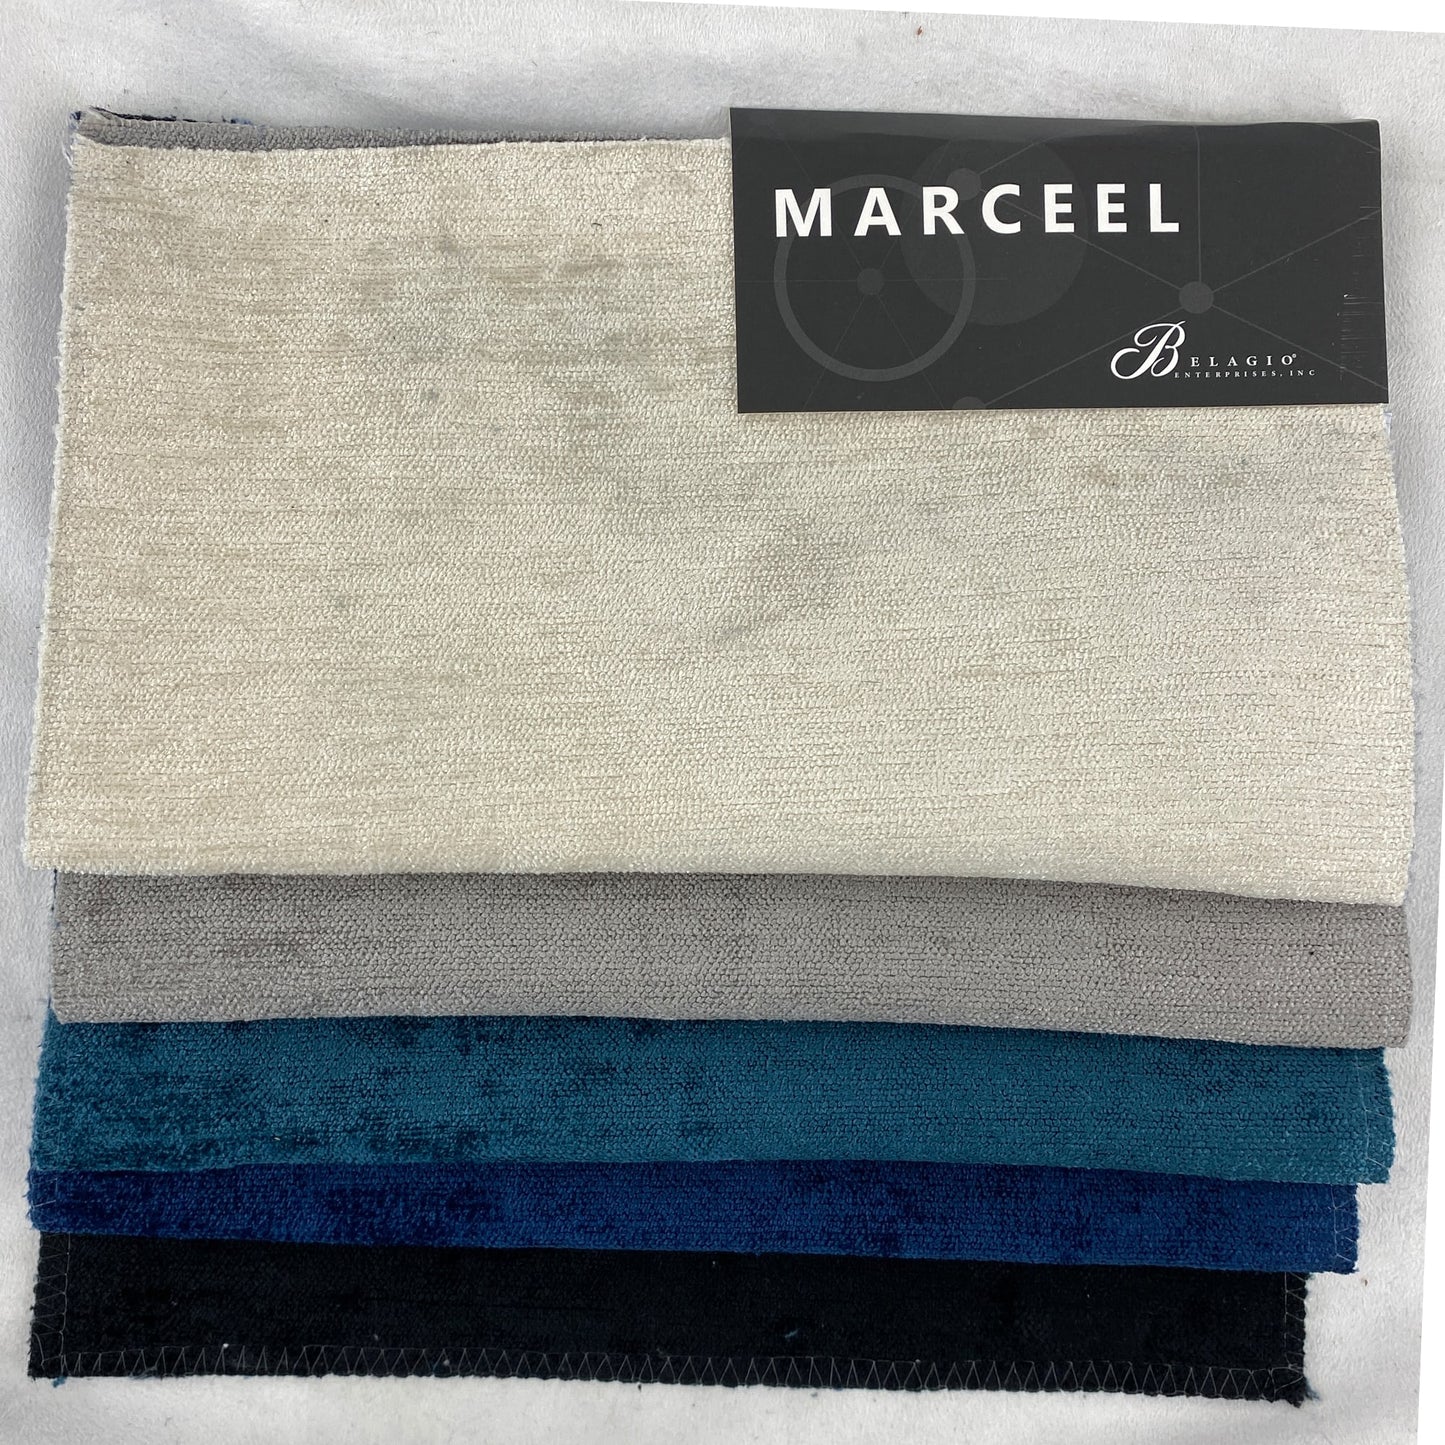 "Marceel" Fabric (Black Color)